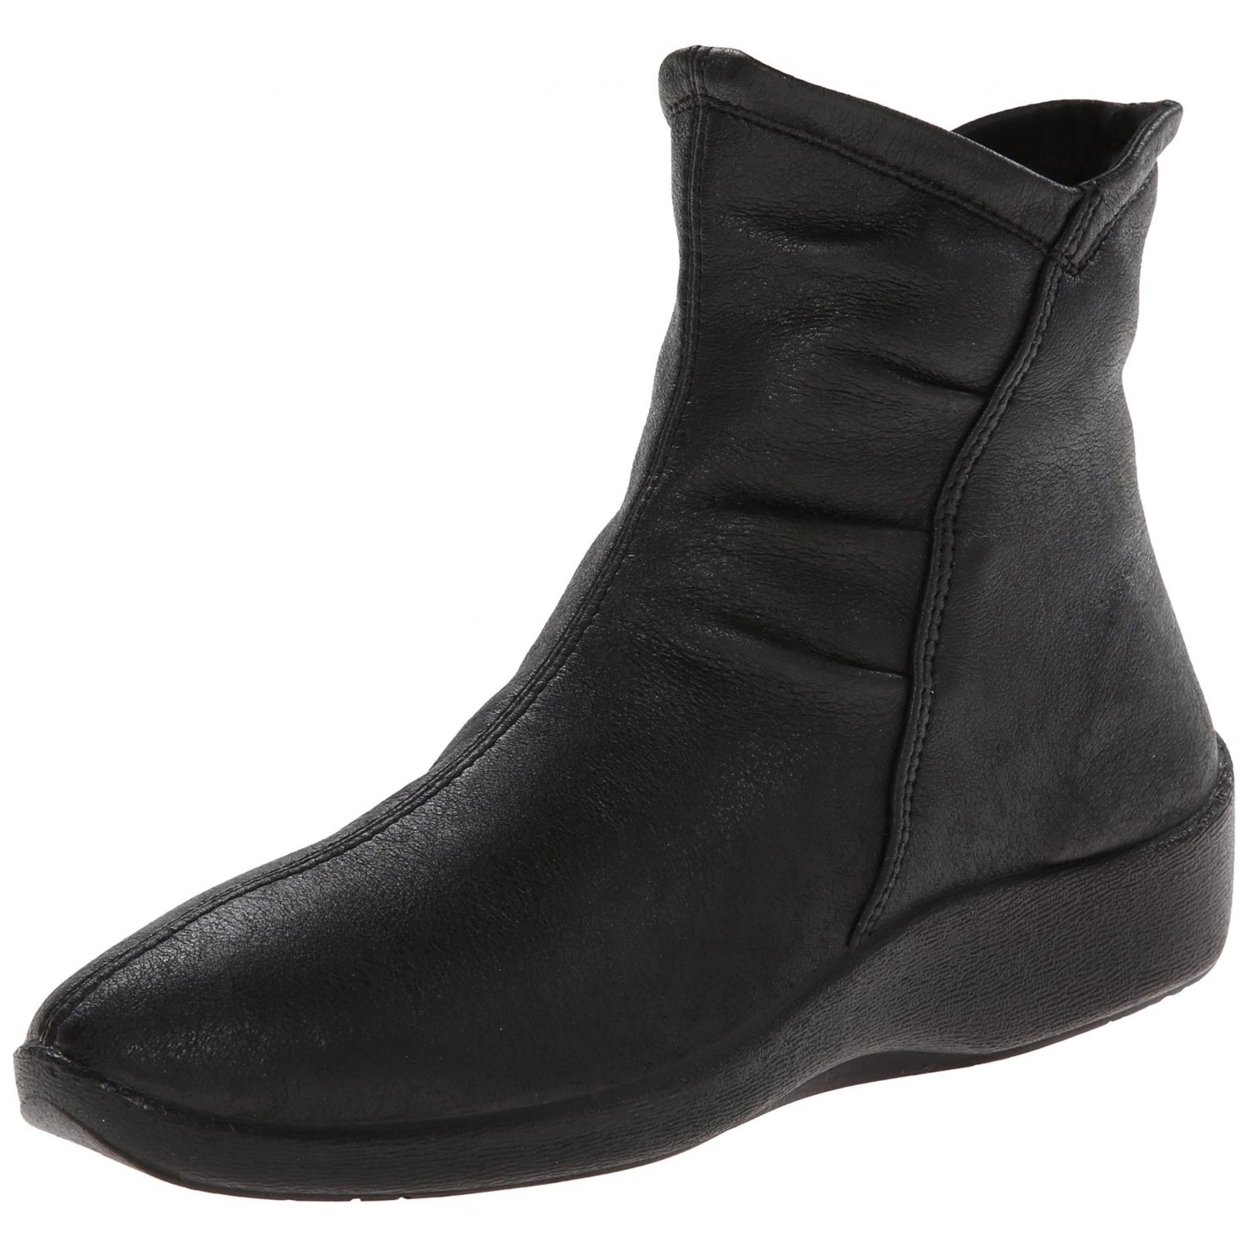 Arcopedico Women's L19 Ankle Boot Black Synthetic - 4281-01 37 M EU BLACK - BLACK, 9